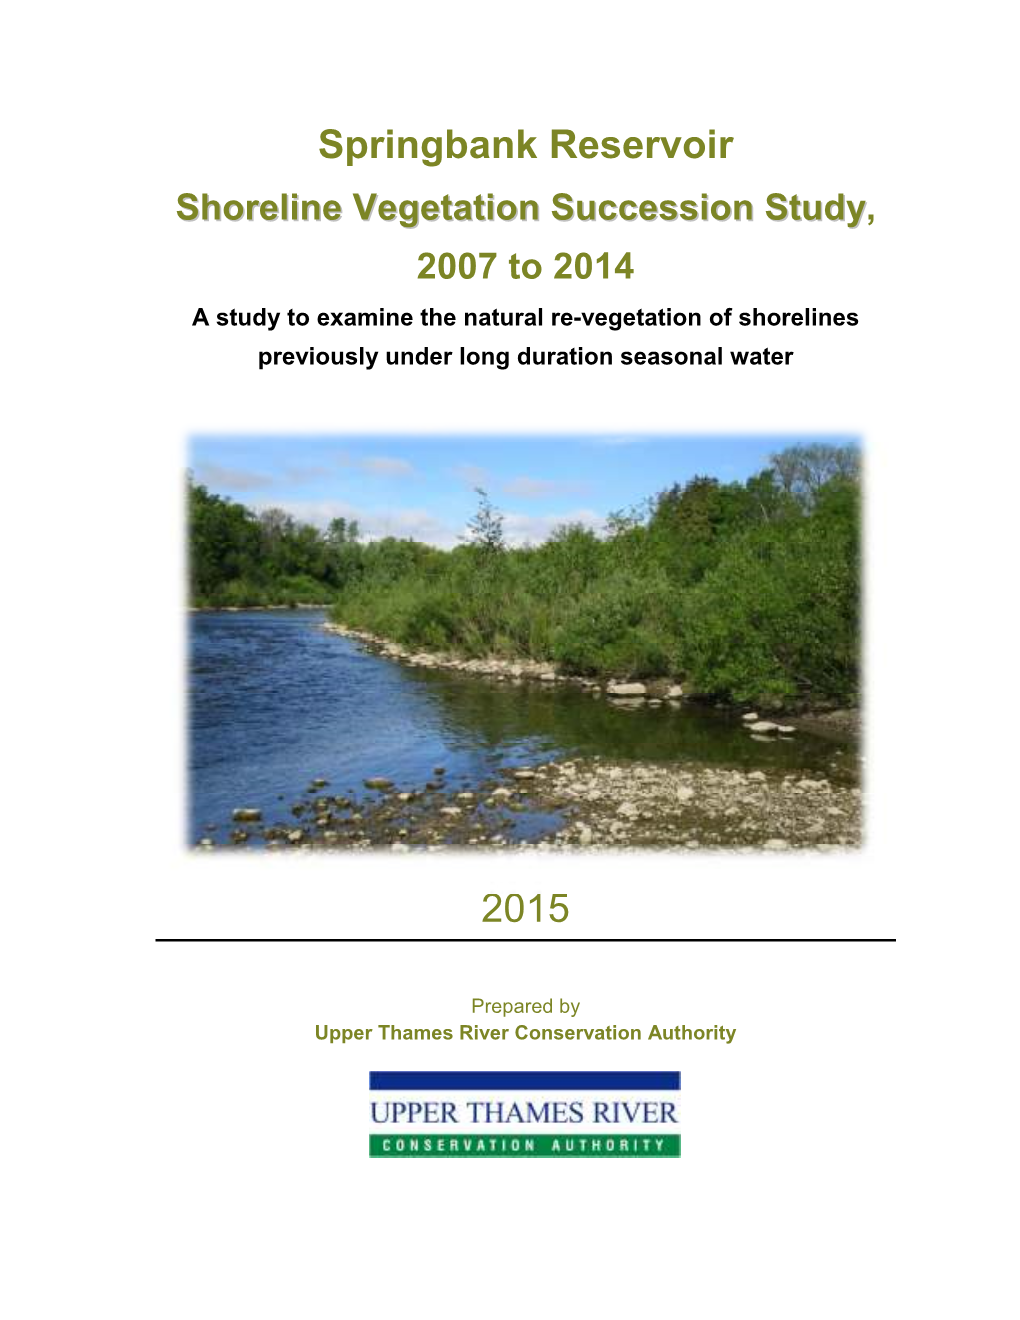 Springbank Reservoir Shoreline Vegetation Succession Study, 2007